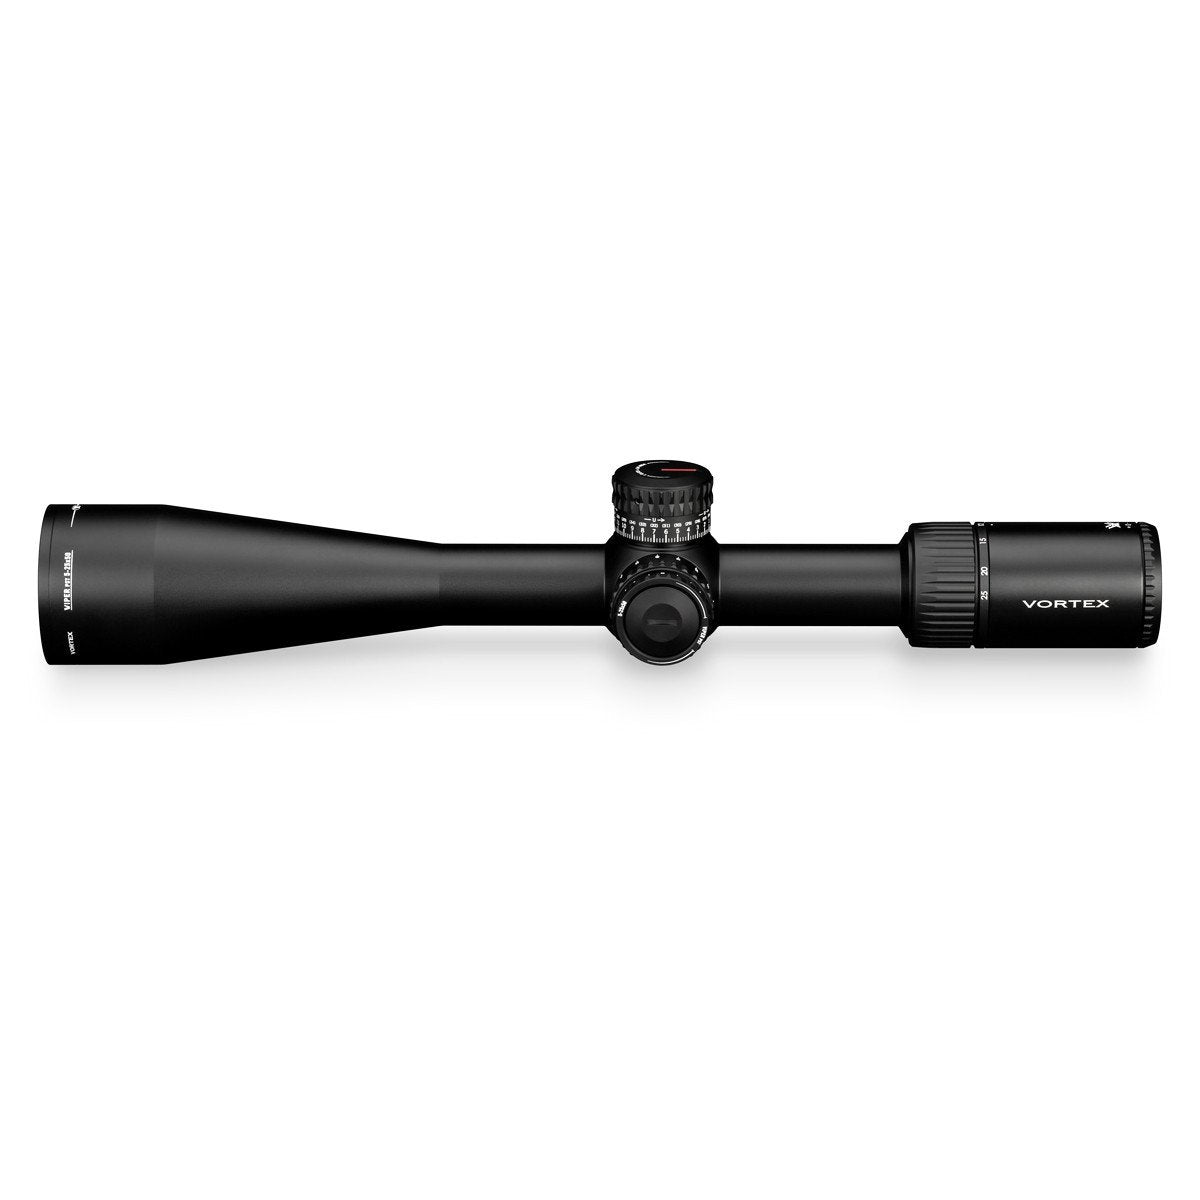 Vortex Viper PST Gen II 5-25x50 SFP Riflescope NOT ACTIVE by Vortex Optics | Optics - goHUNT Shop